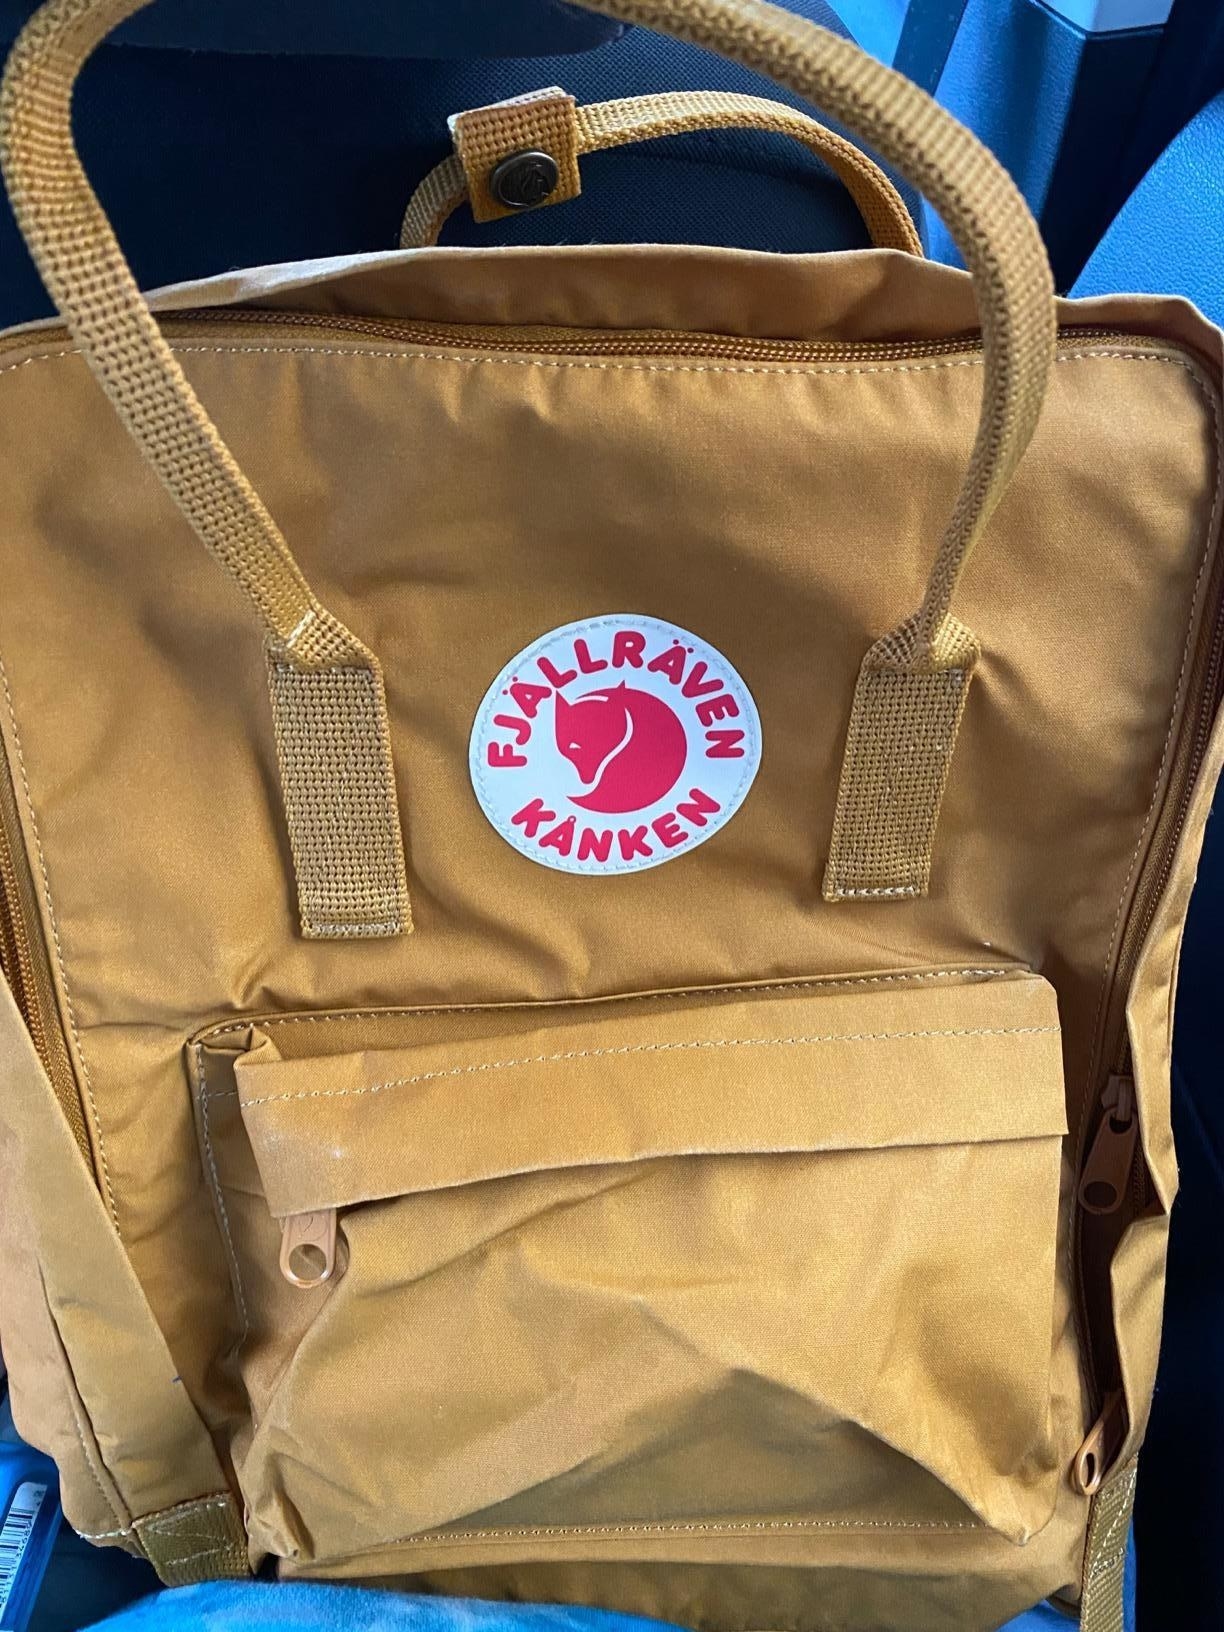 reviewer&#x27;s mustard yellow rectangular backpack